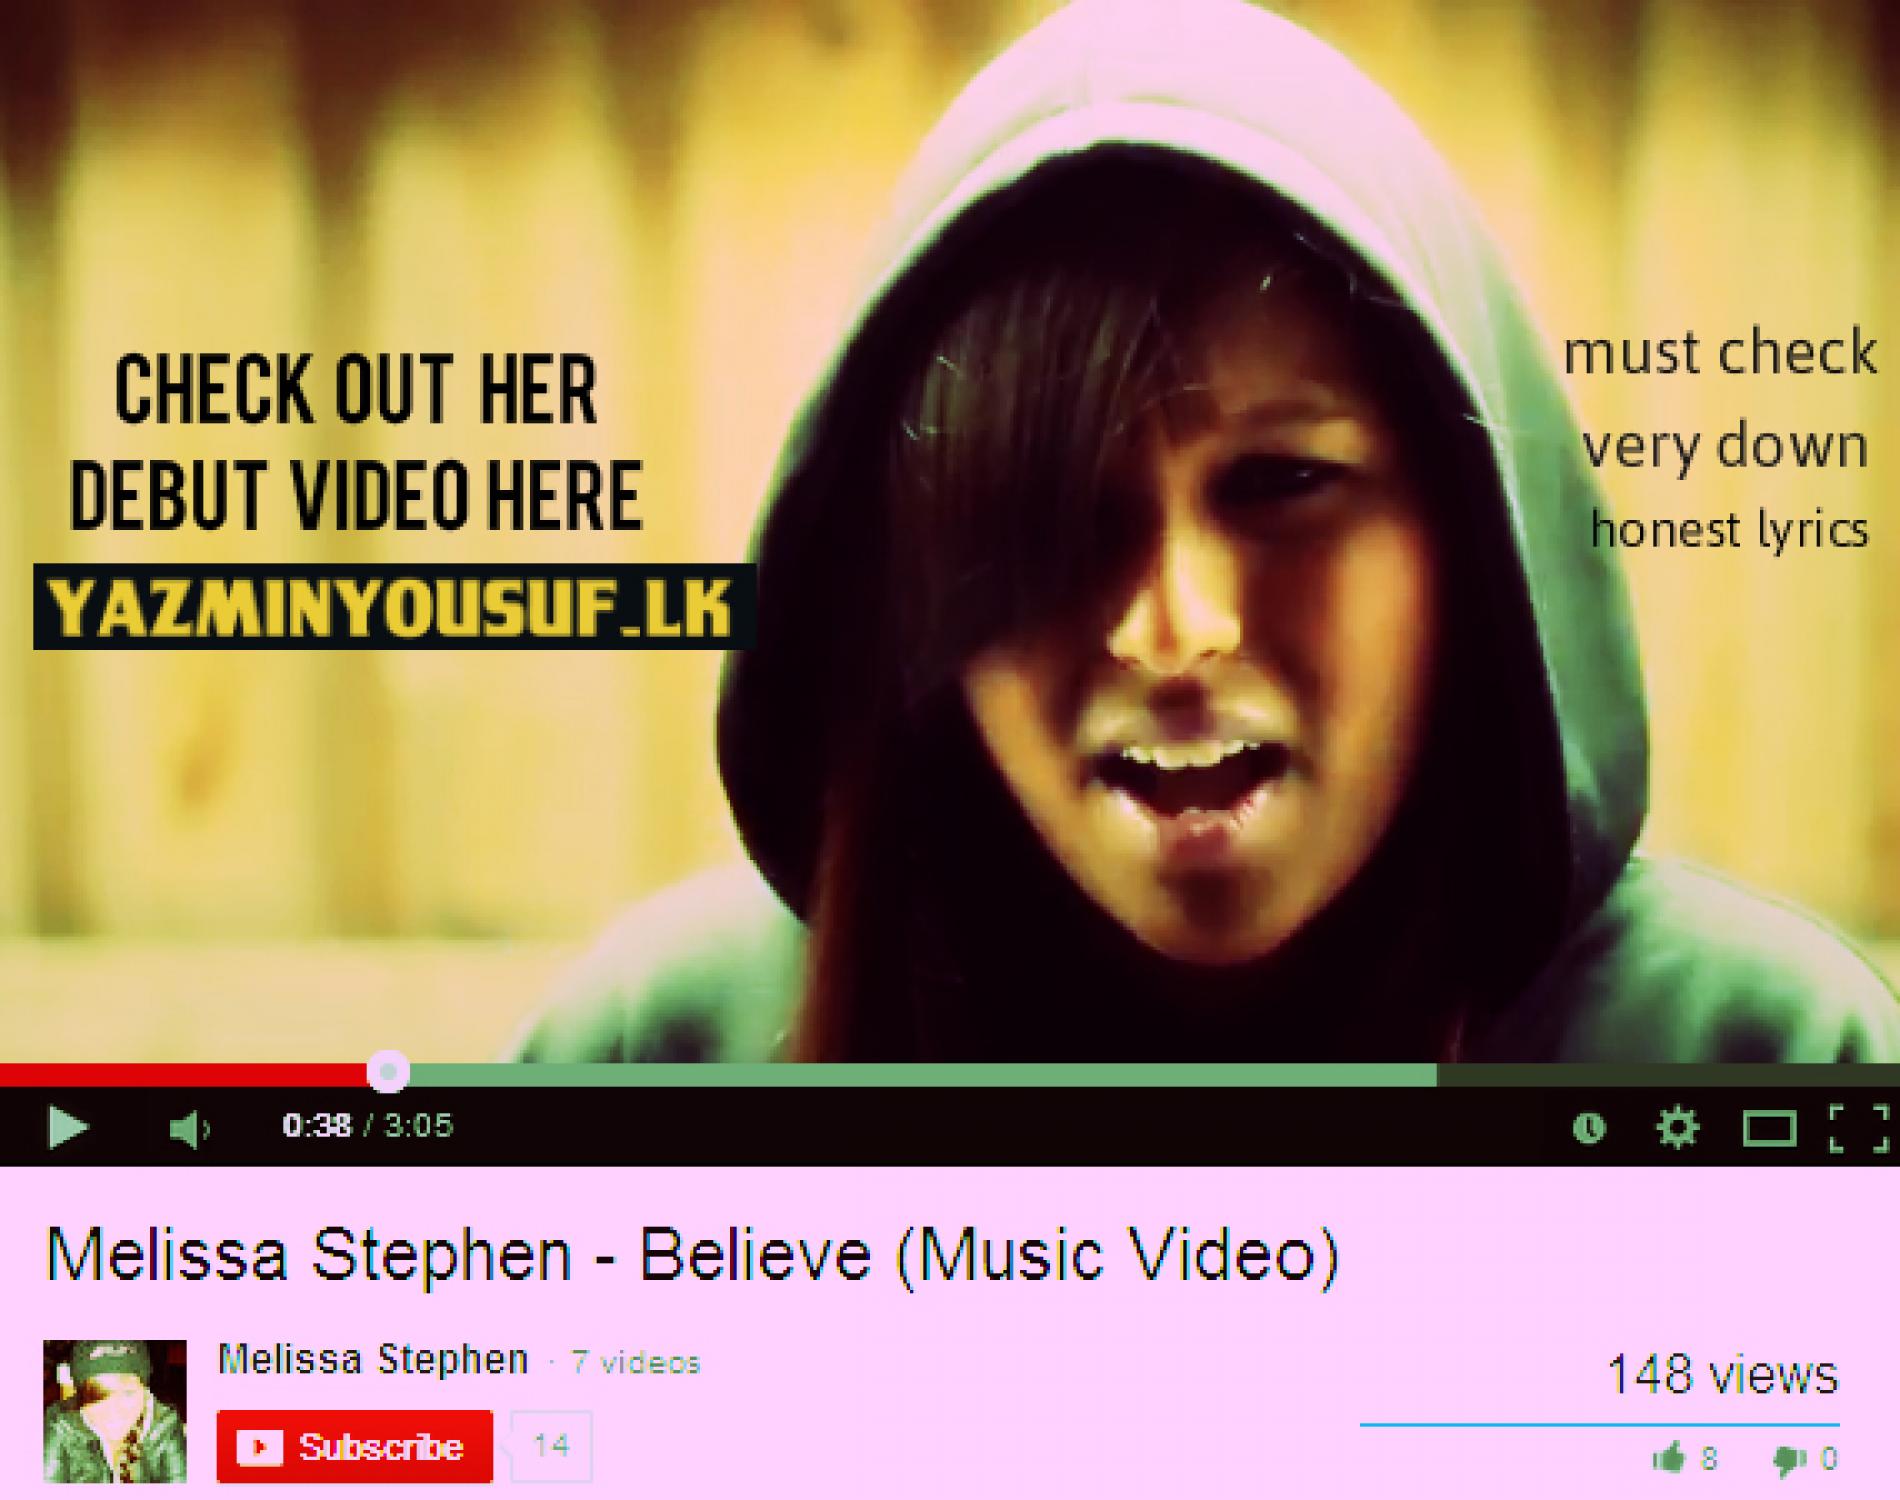 Melissa Stephen: Believe The Video